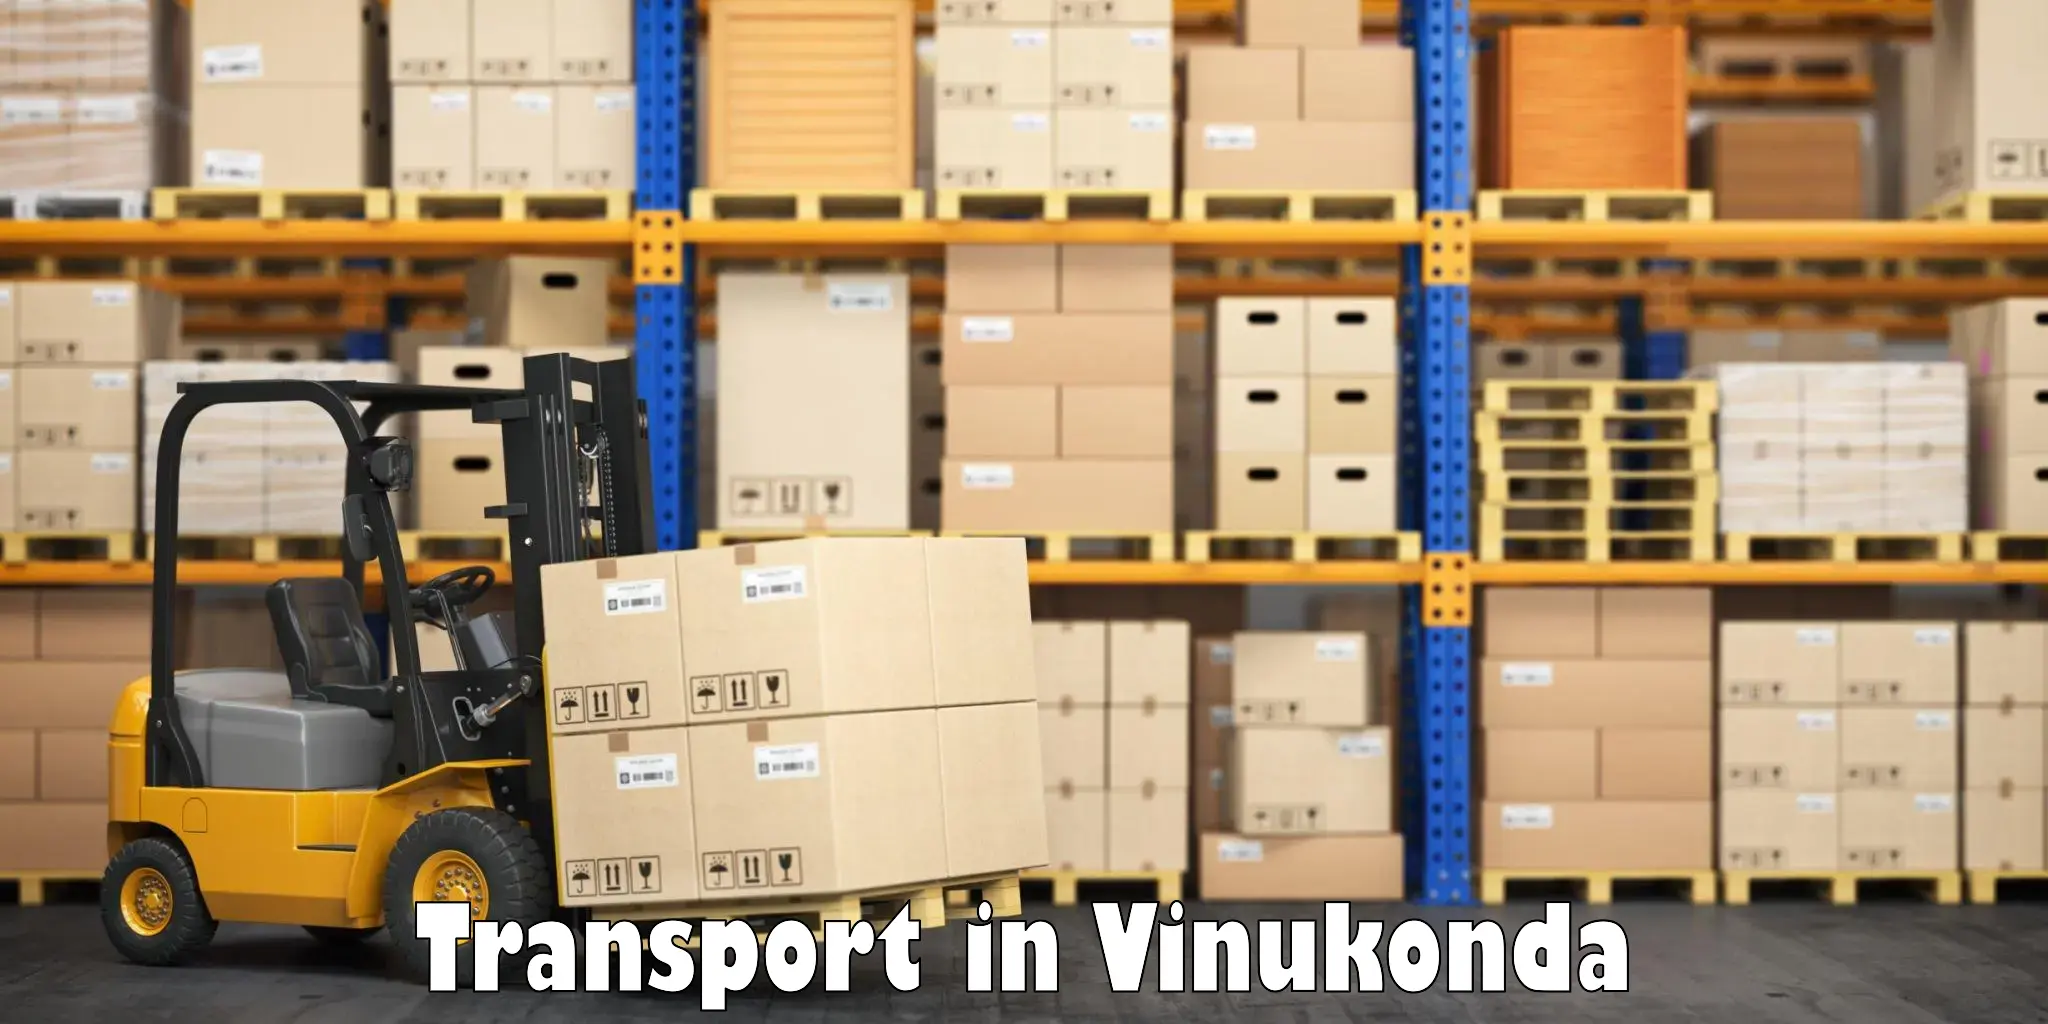 Interstate goods transport in Vinukonda